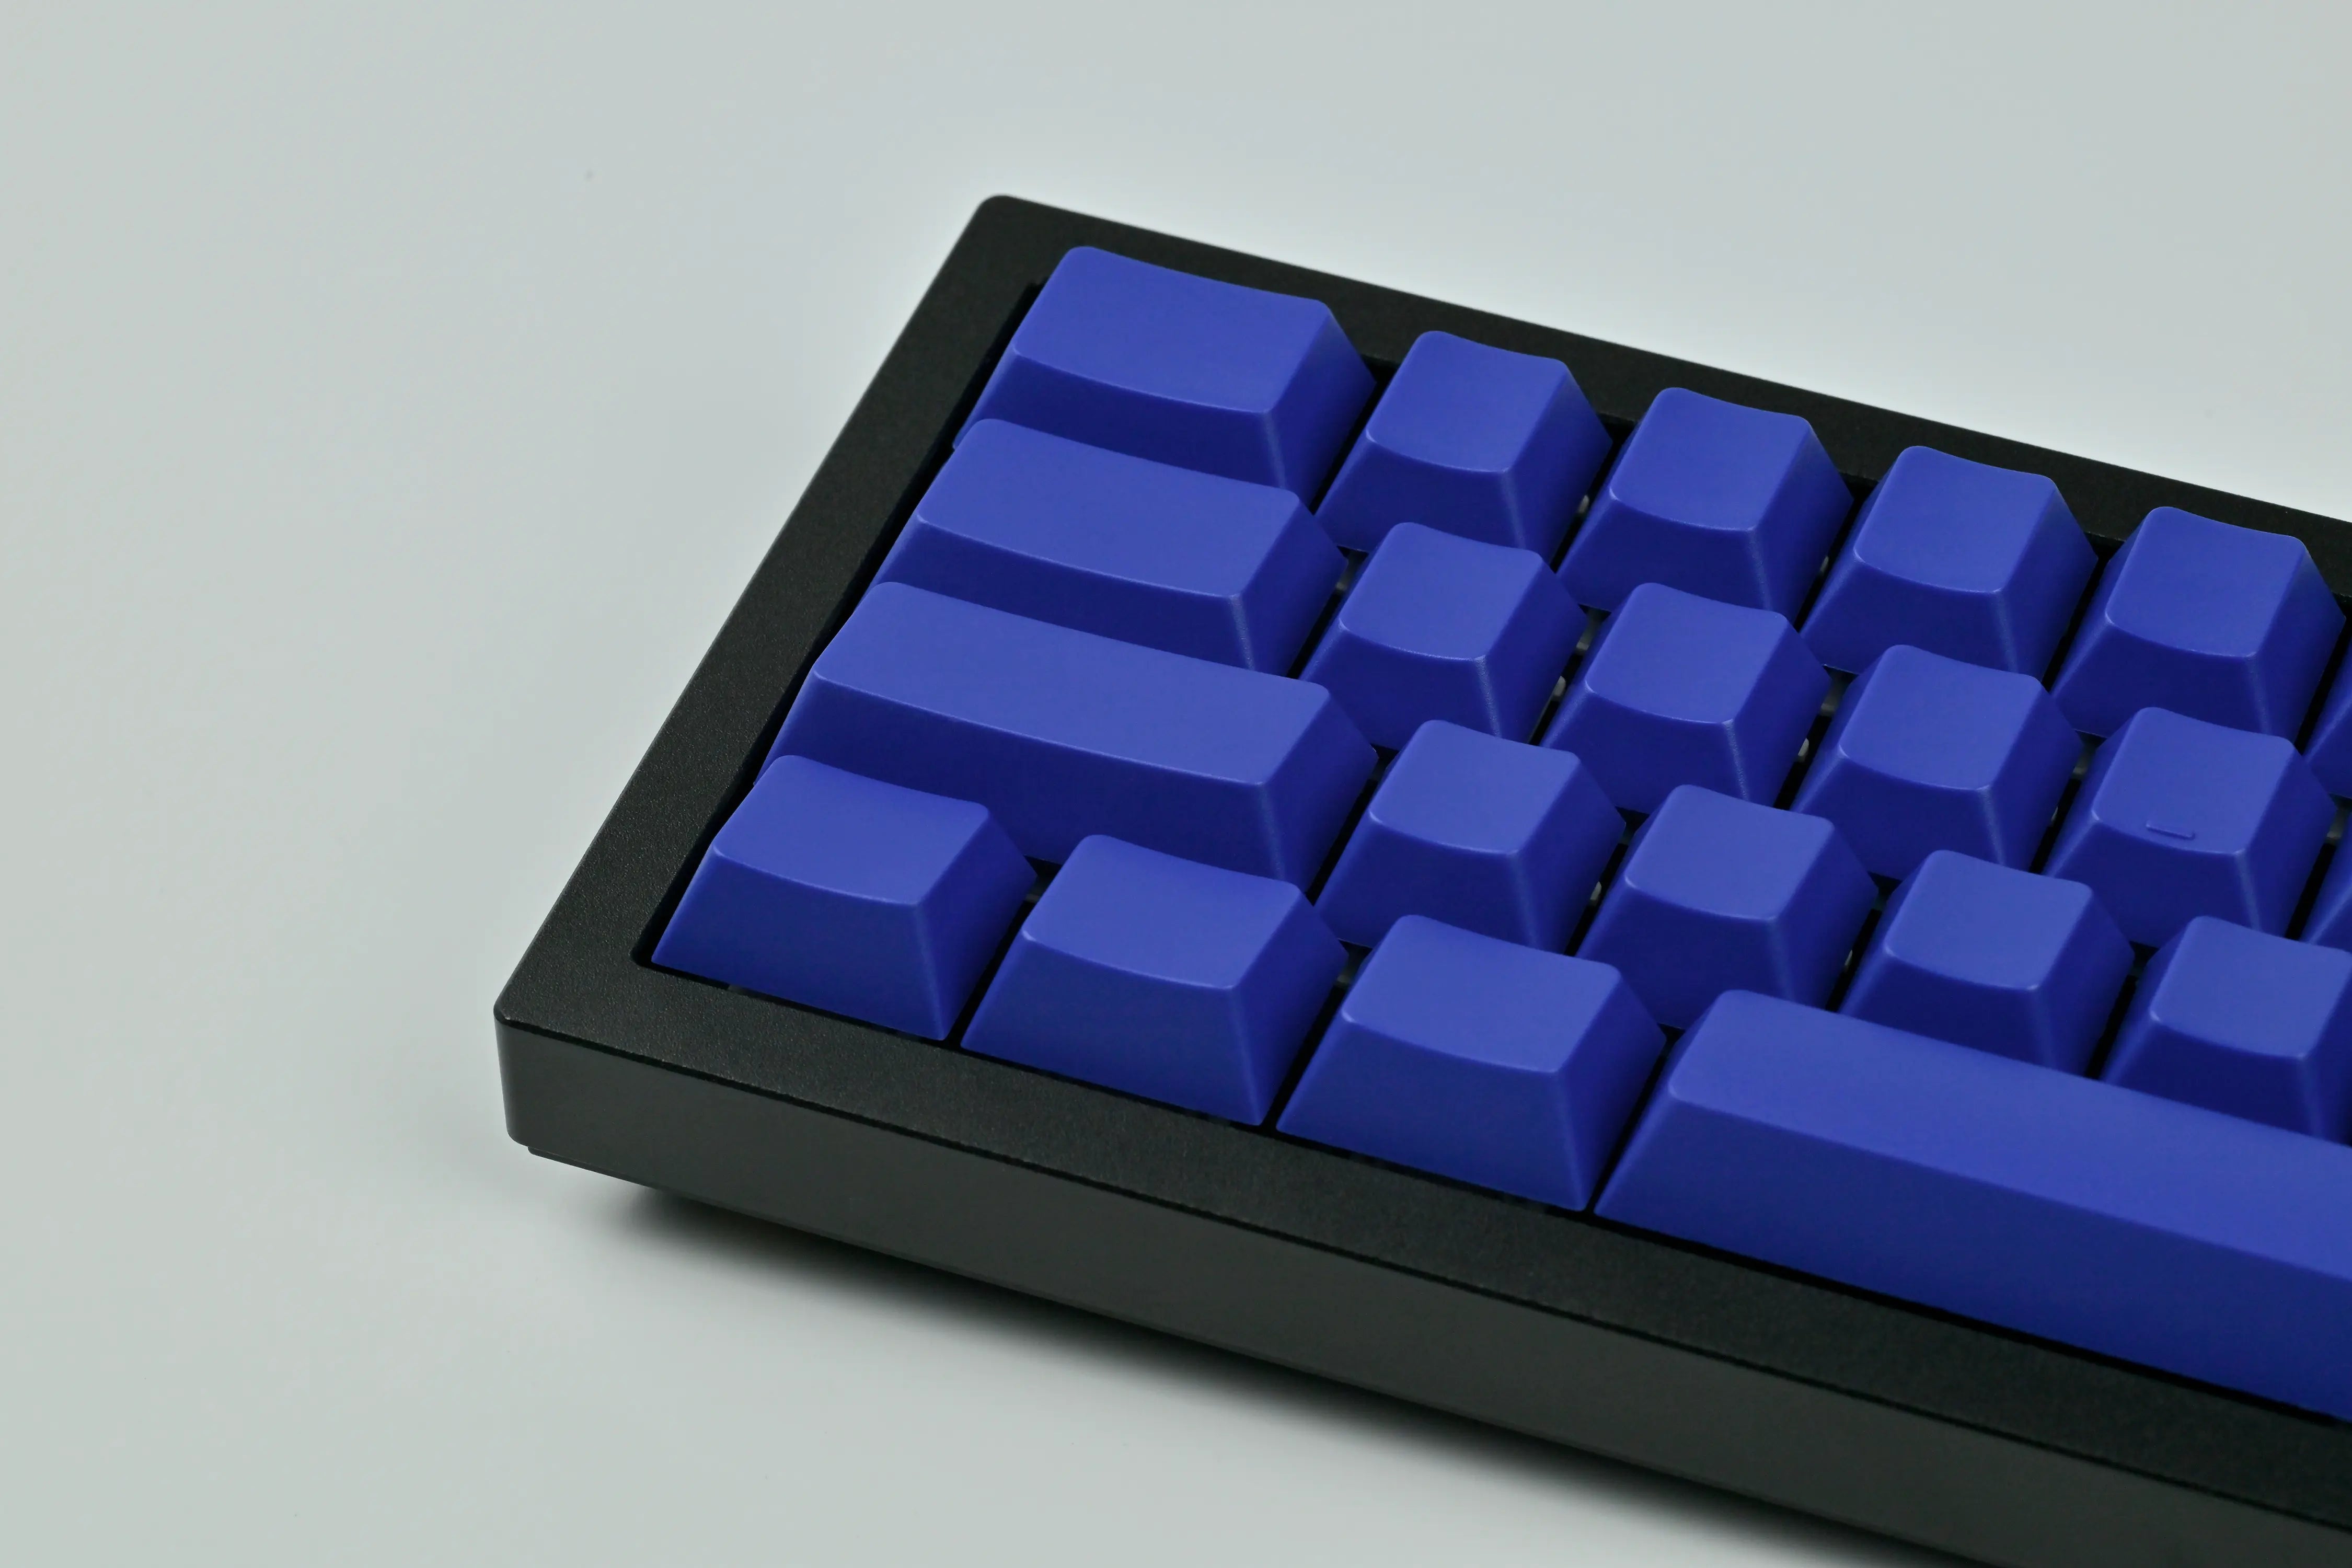 Keyreative ABS Cherry Profile Blue Blank Keycaps